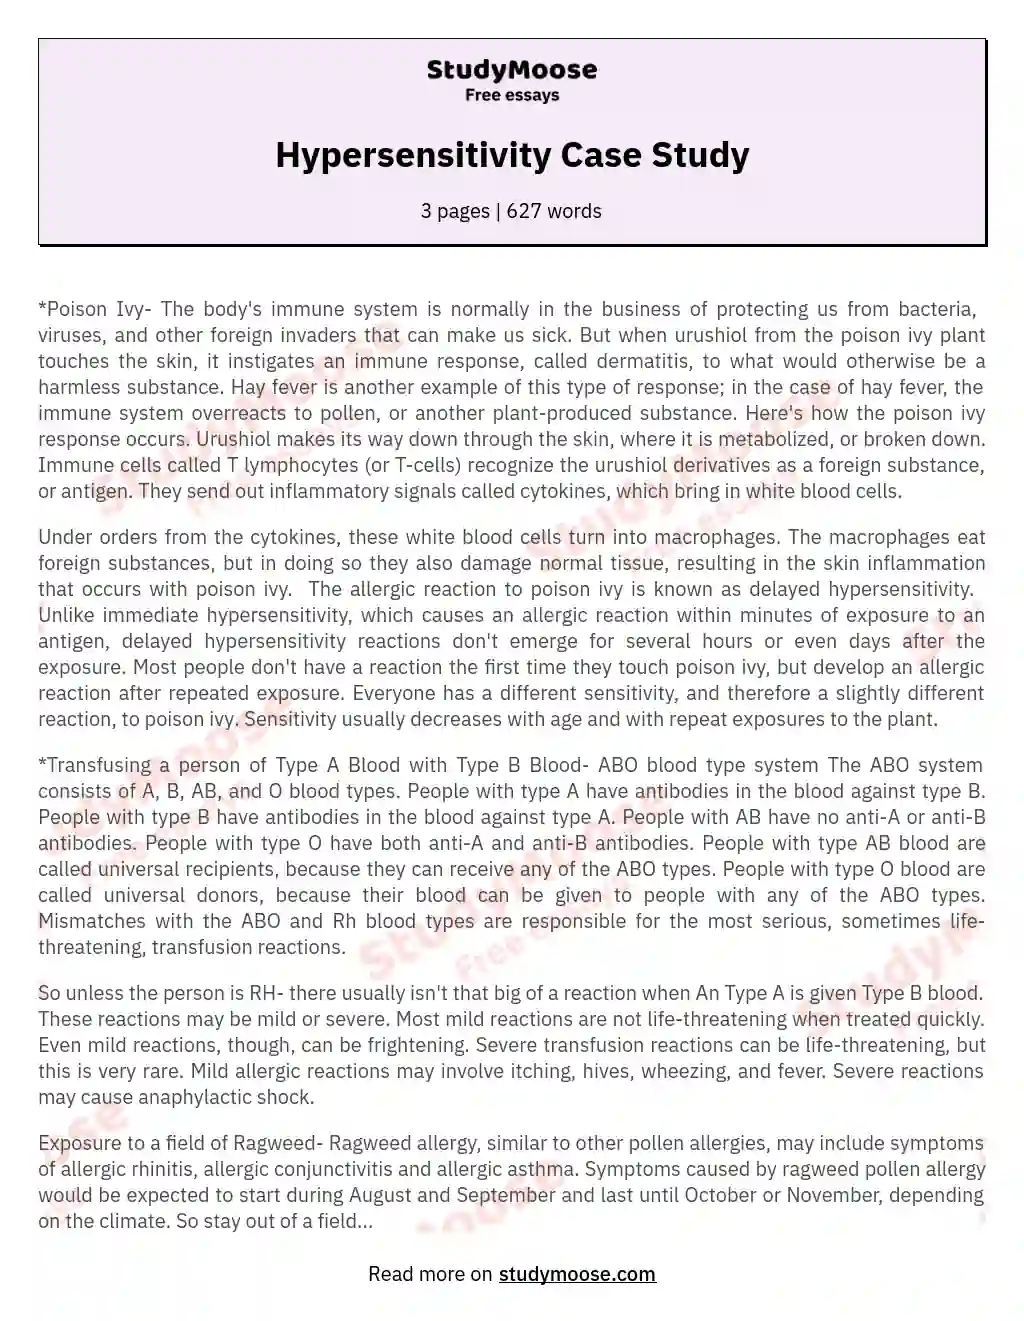 Hypersensitivity Case Study essay